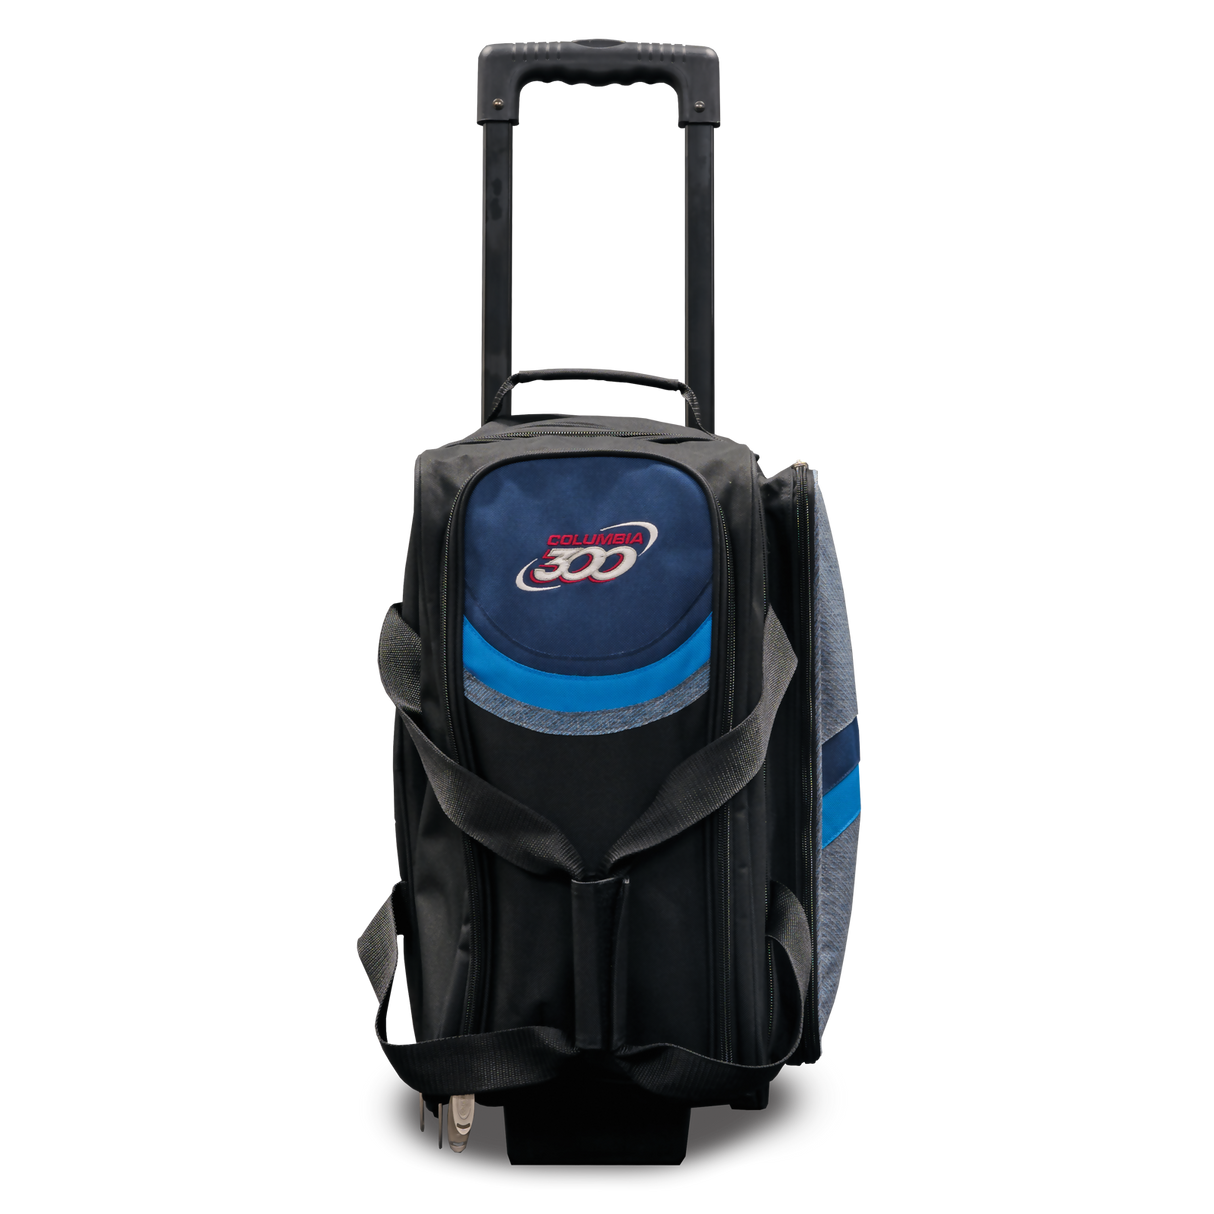 Columbia 300 Boss Double 2 Ball Roller Blue Bowling Bag suitcase league tournament play sale discount coupon online pba tour